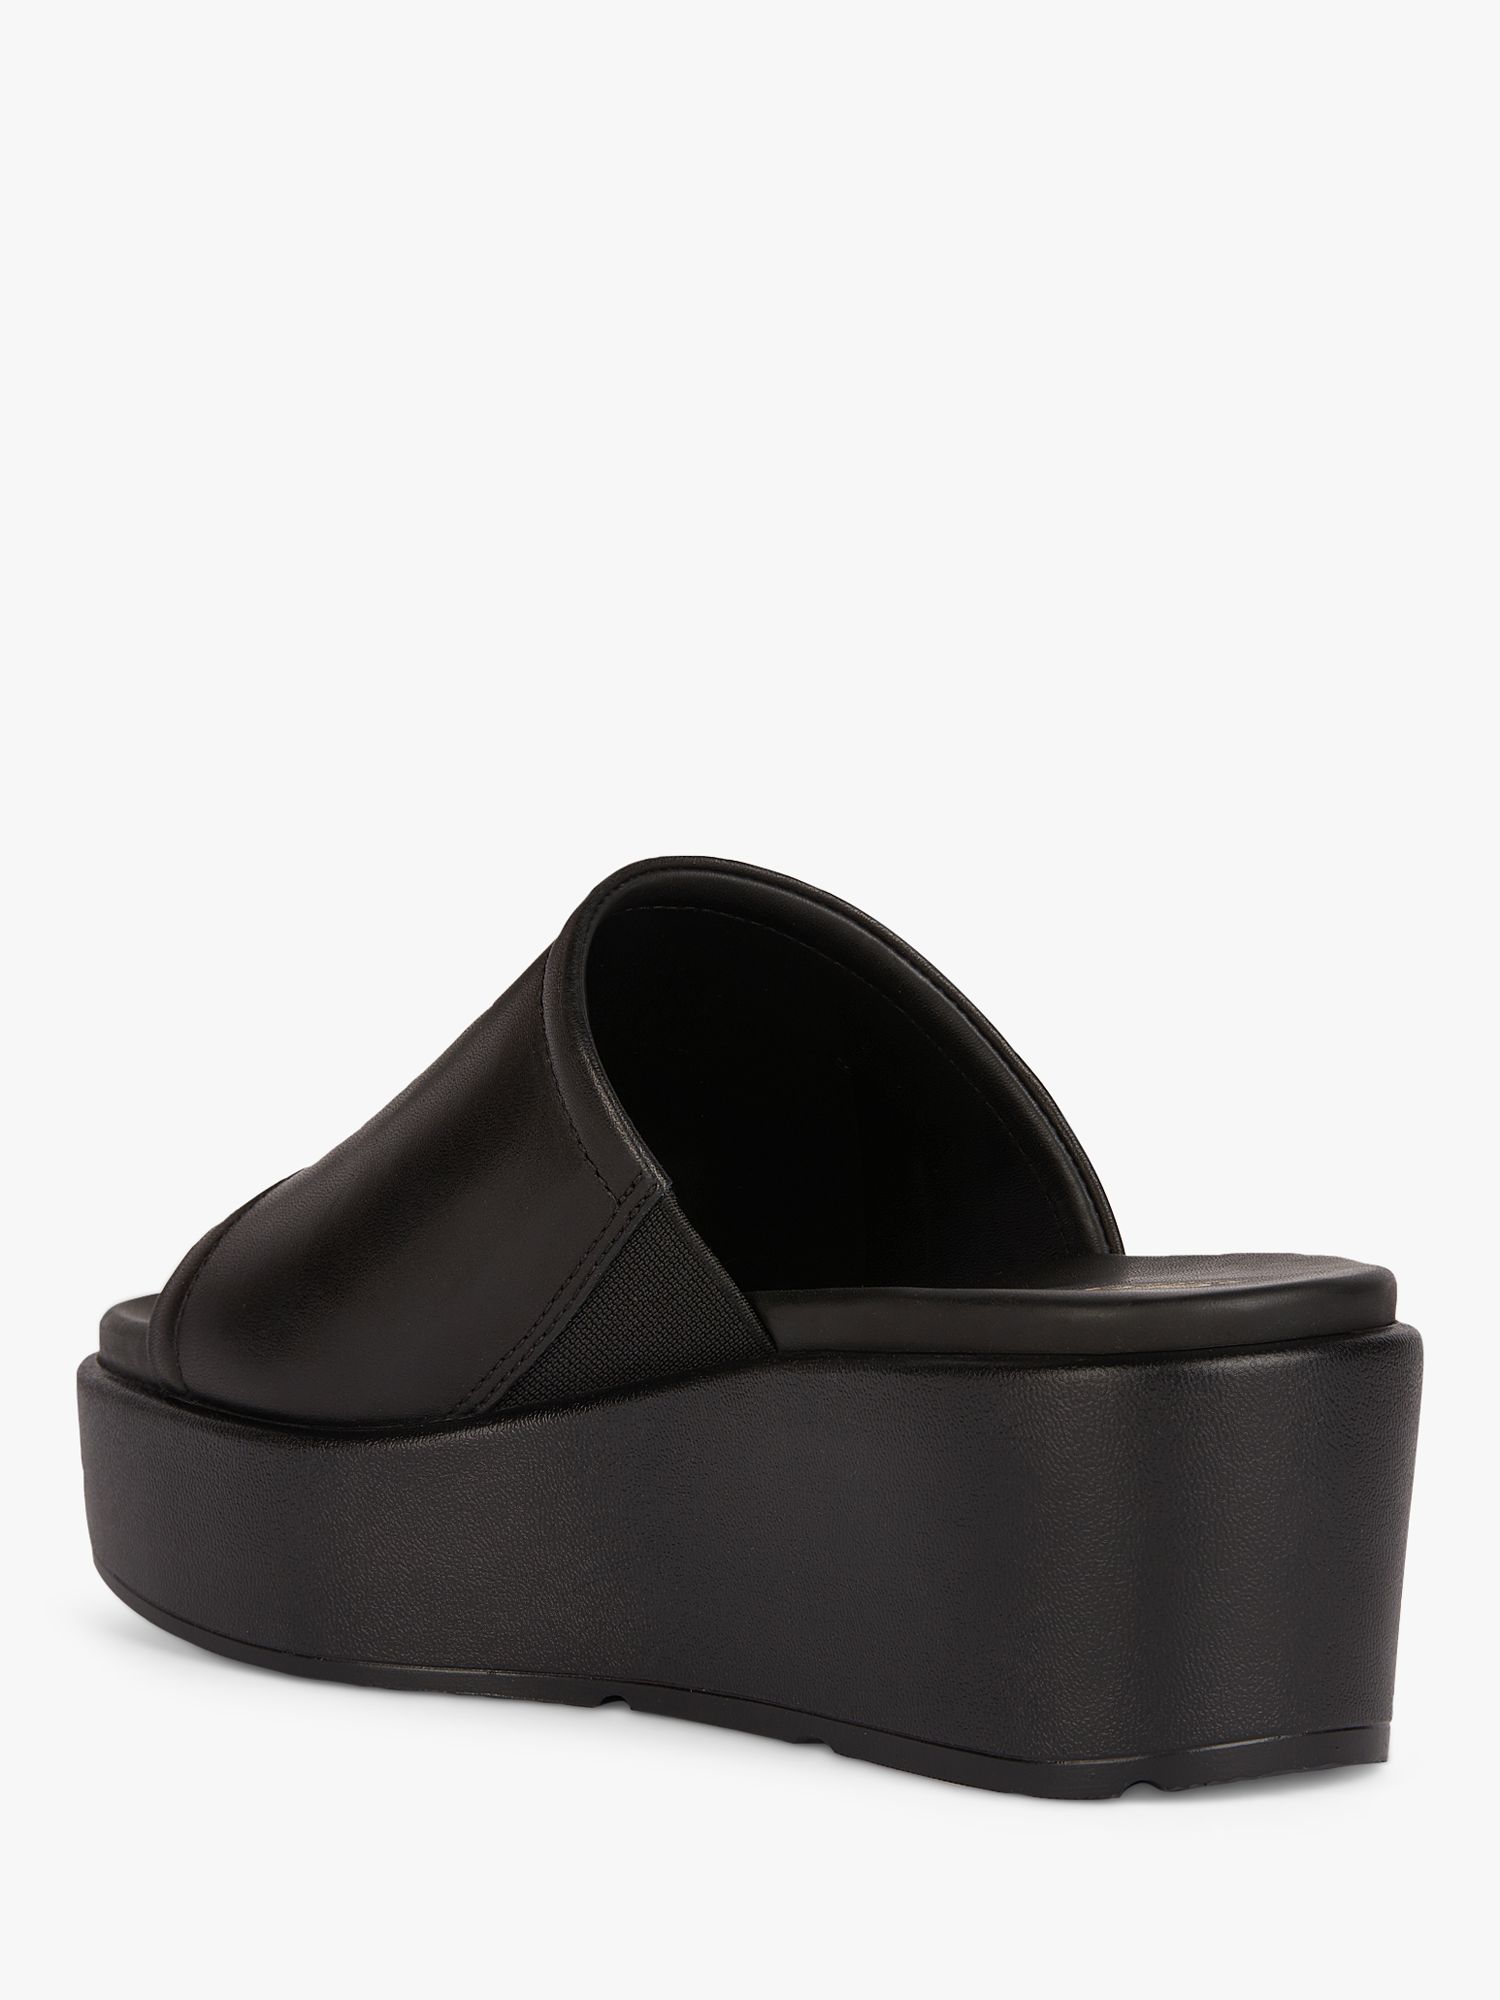 Geox Xand 2.2S Leather Platform Wedge Sandals, Black, EU36